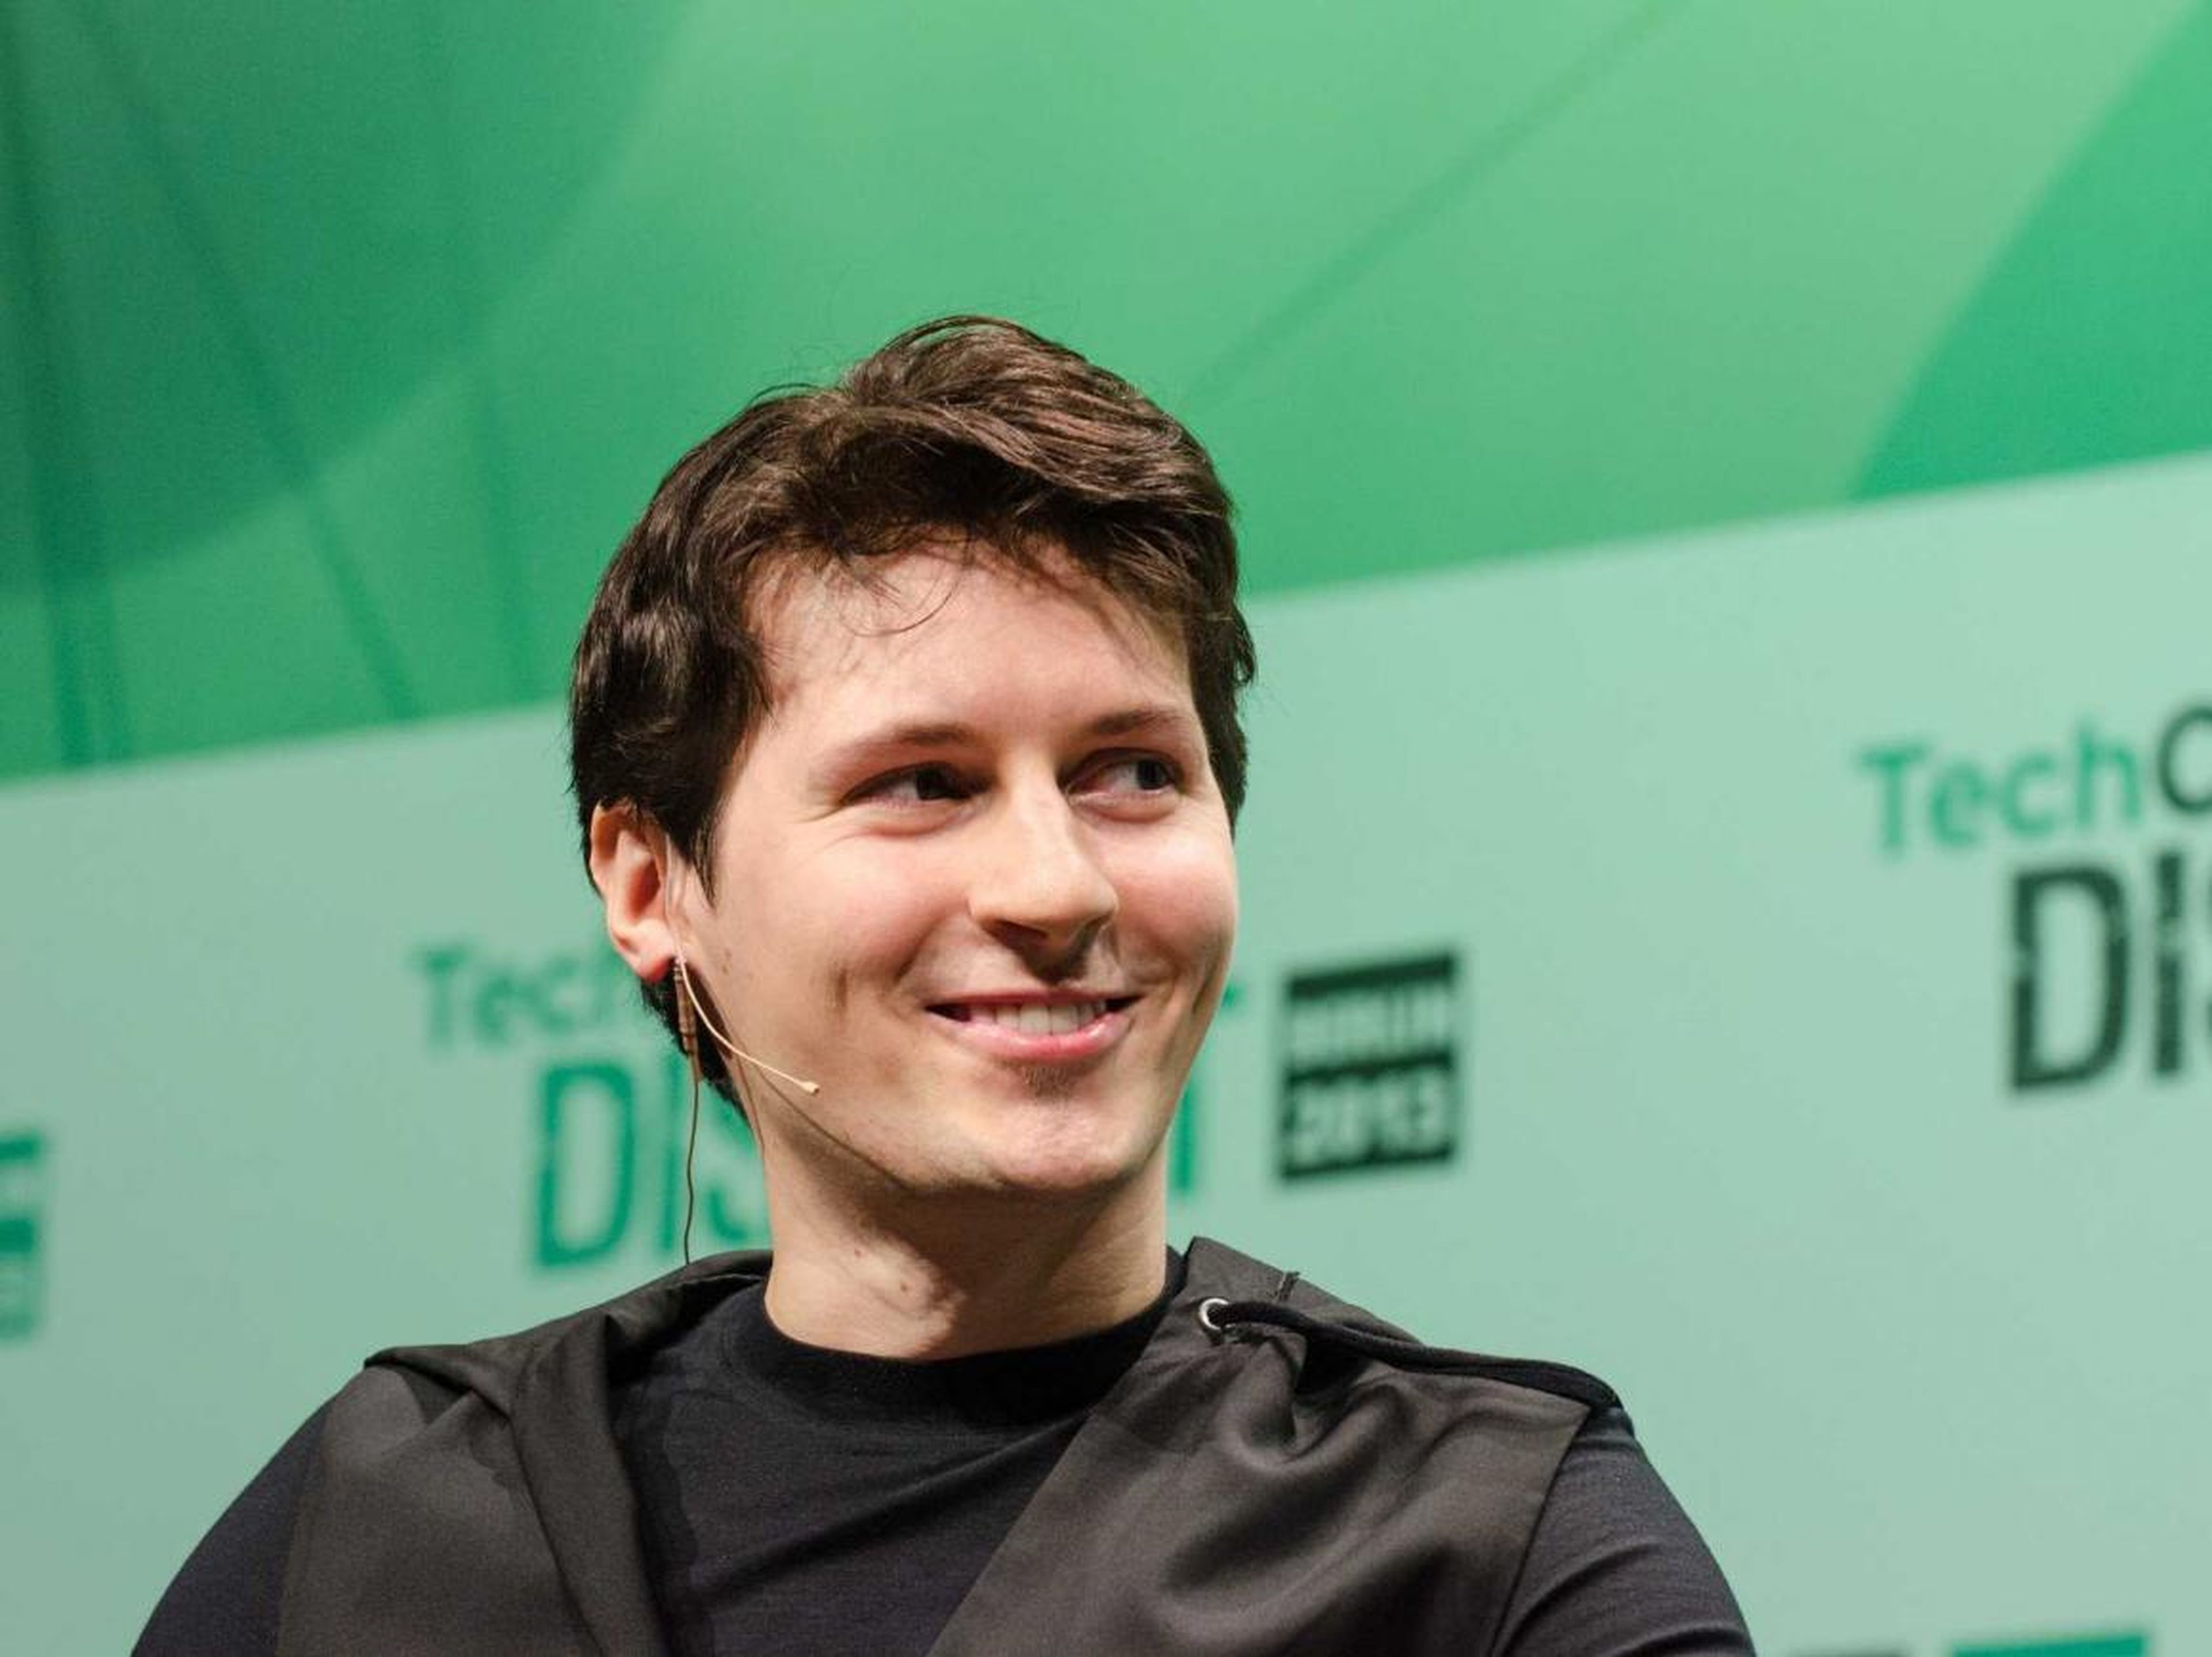 17. Pavel Durov